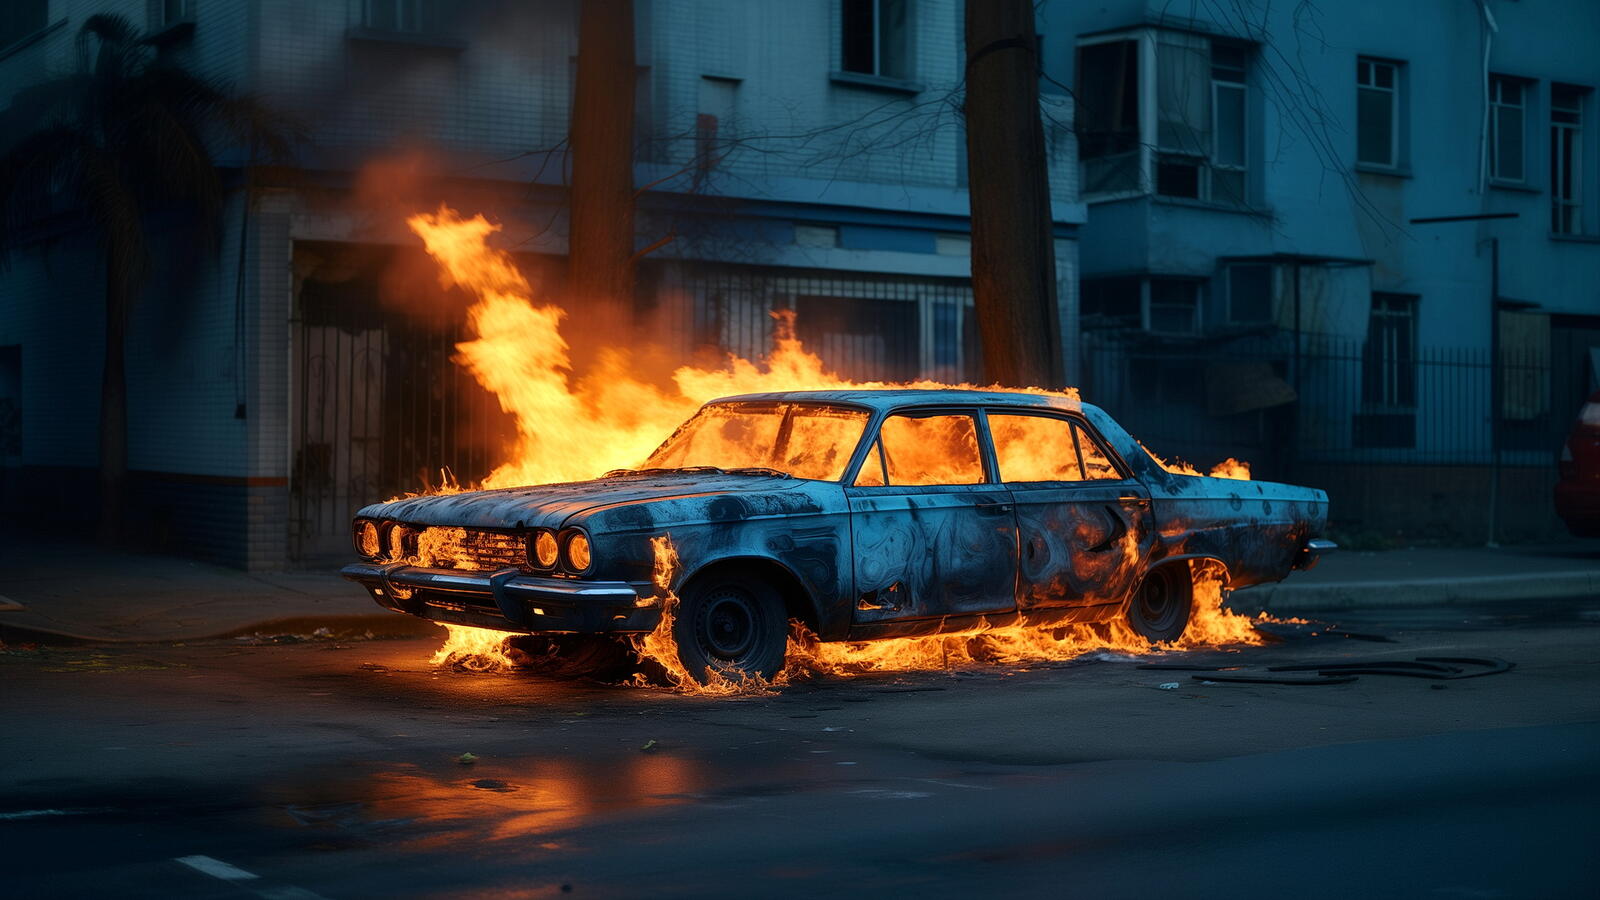 Free photo A burning car on a city street